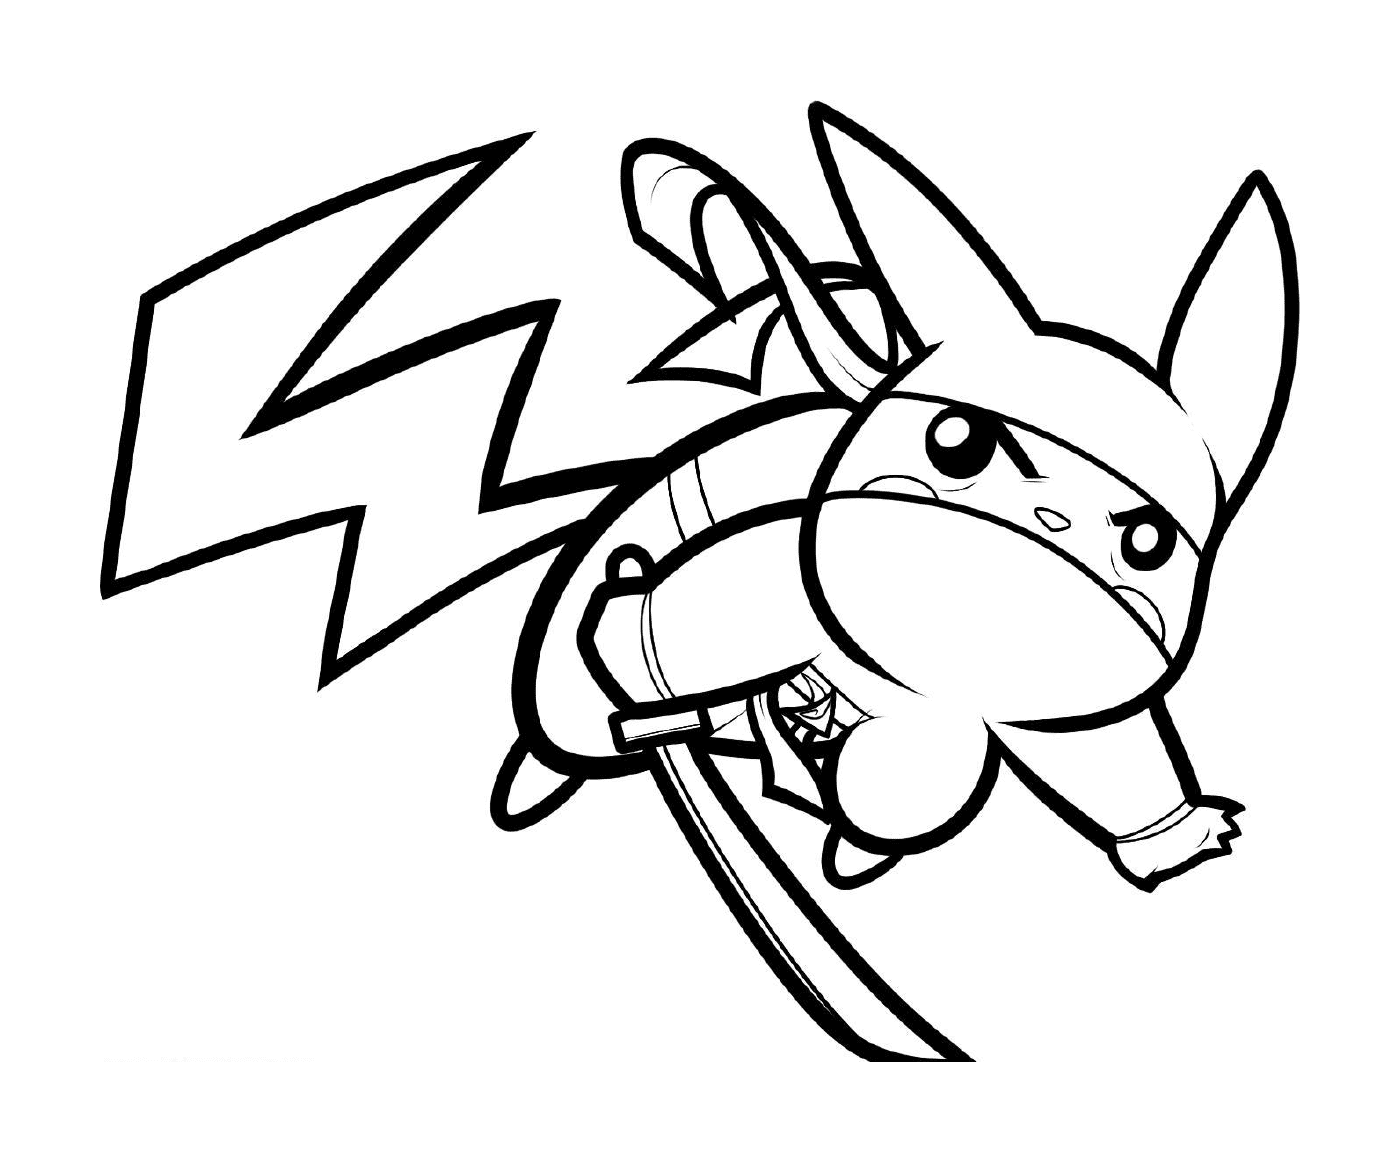  Pikachu, ninja malicioso equipado 